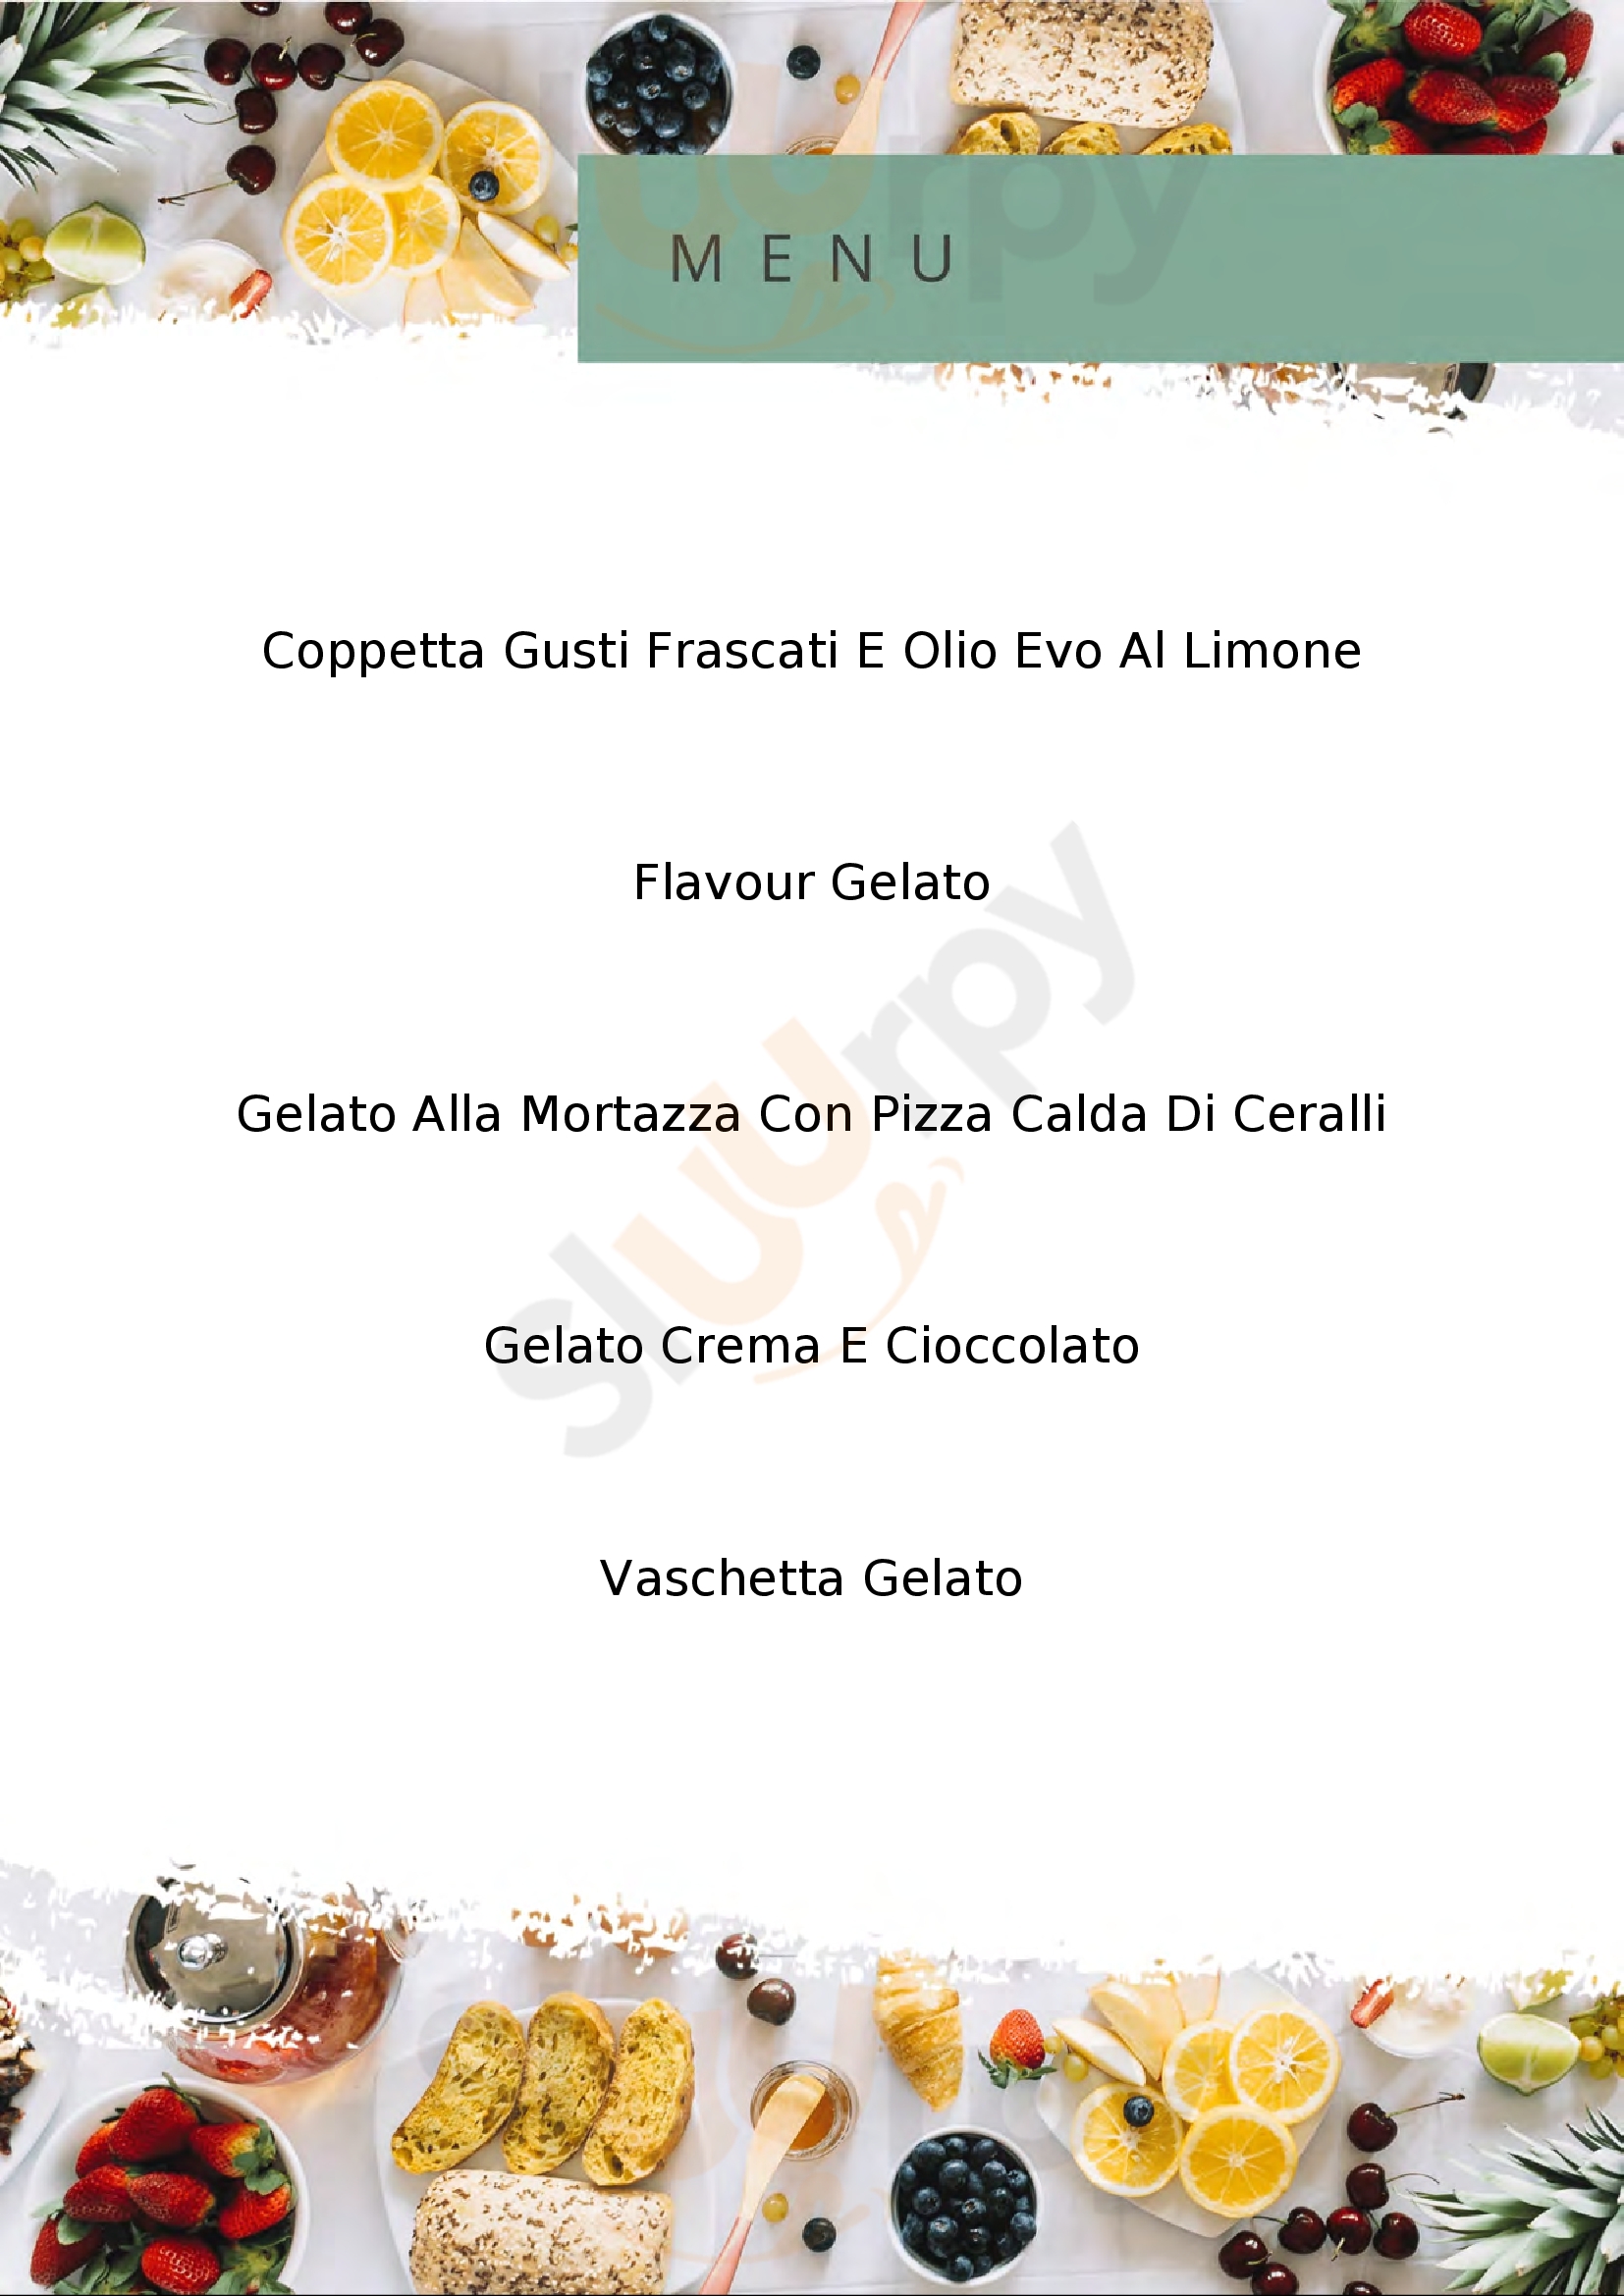 Gelateria Greed Frascati menù 1 pagina